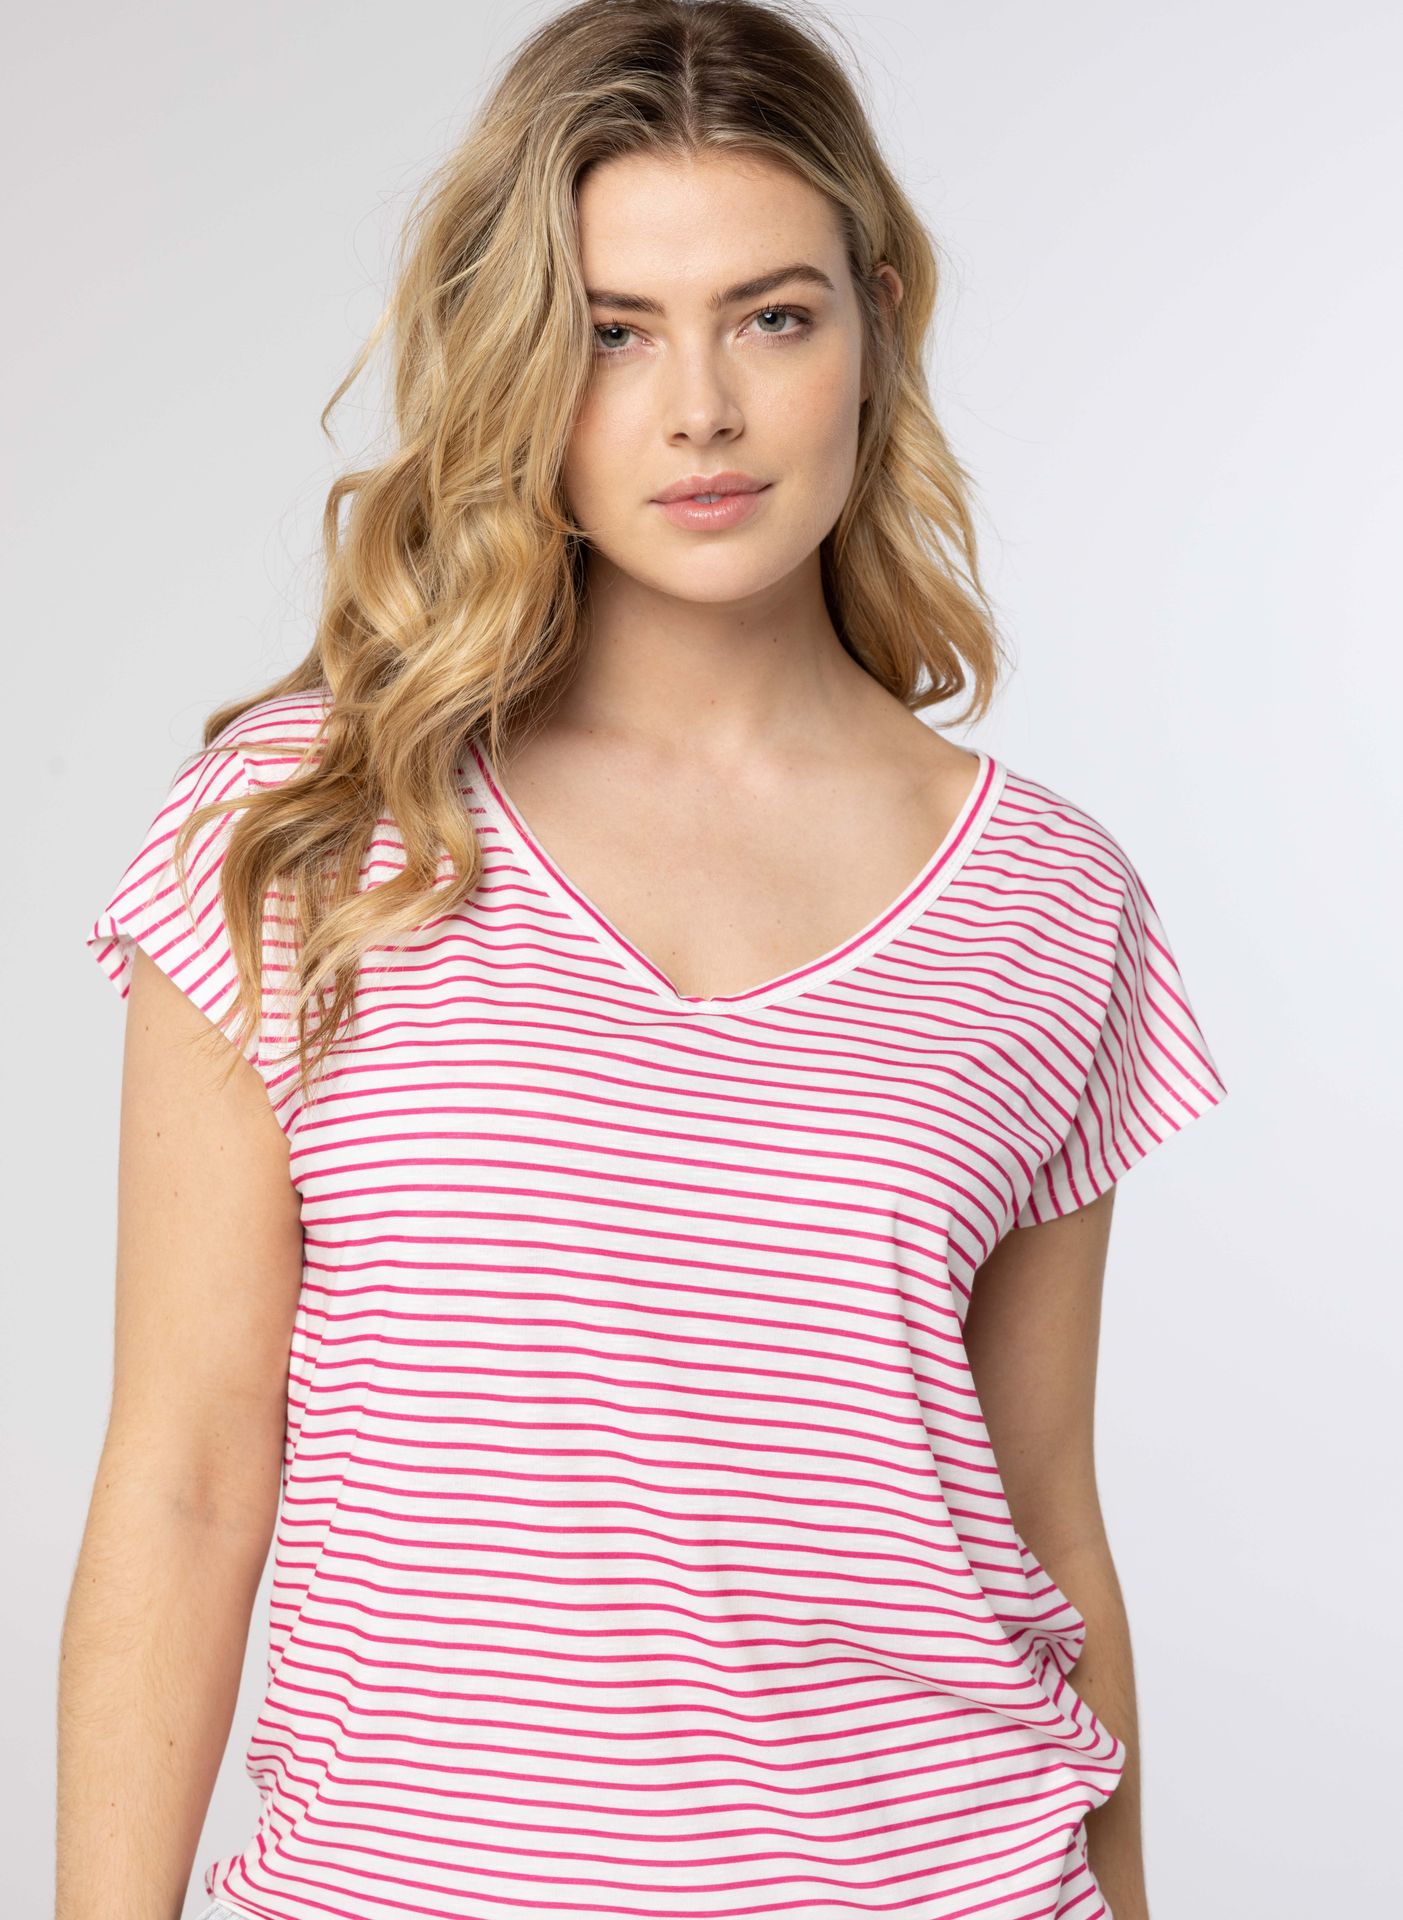 Norah Gestreept shirt pink/white 213429-931